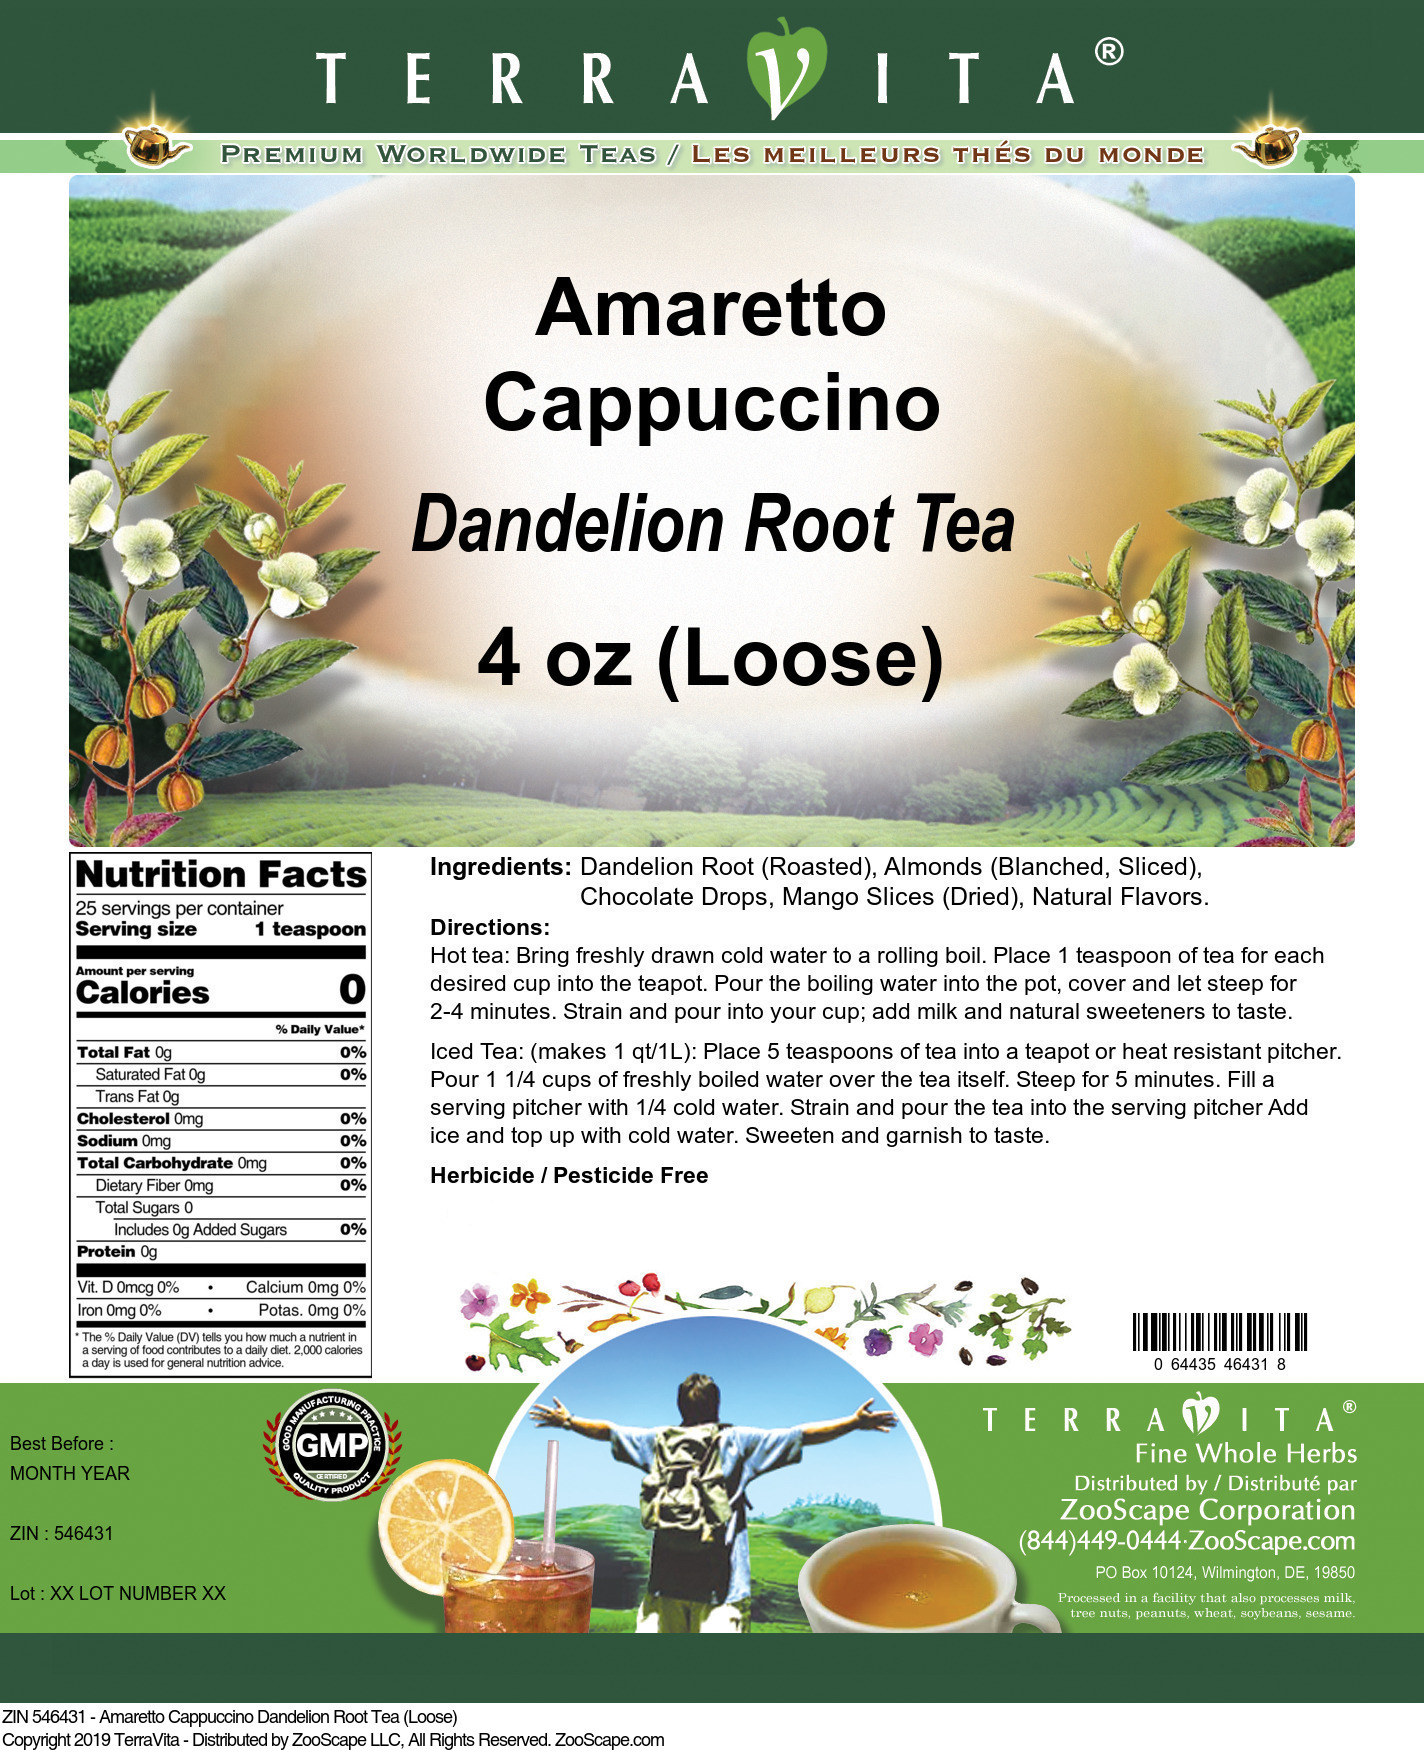 Amaretto Cappuccino Dandelion Root Tea (Loose) - Label